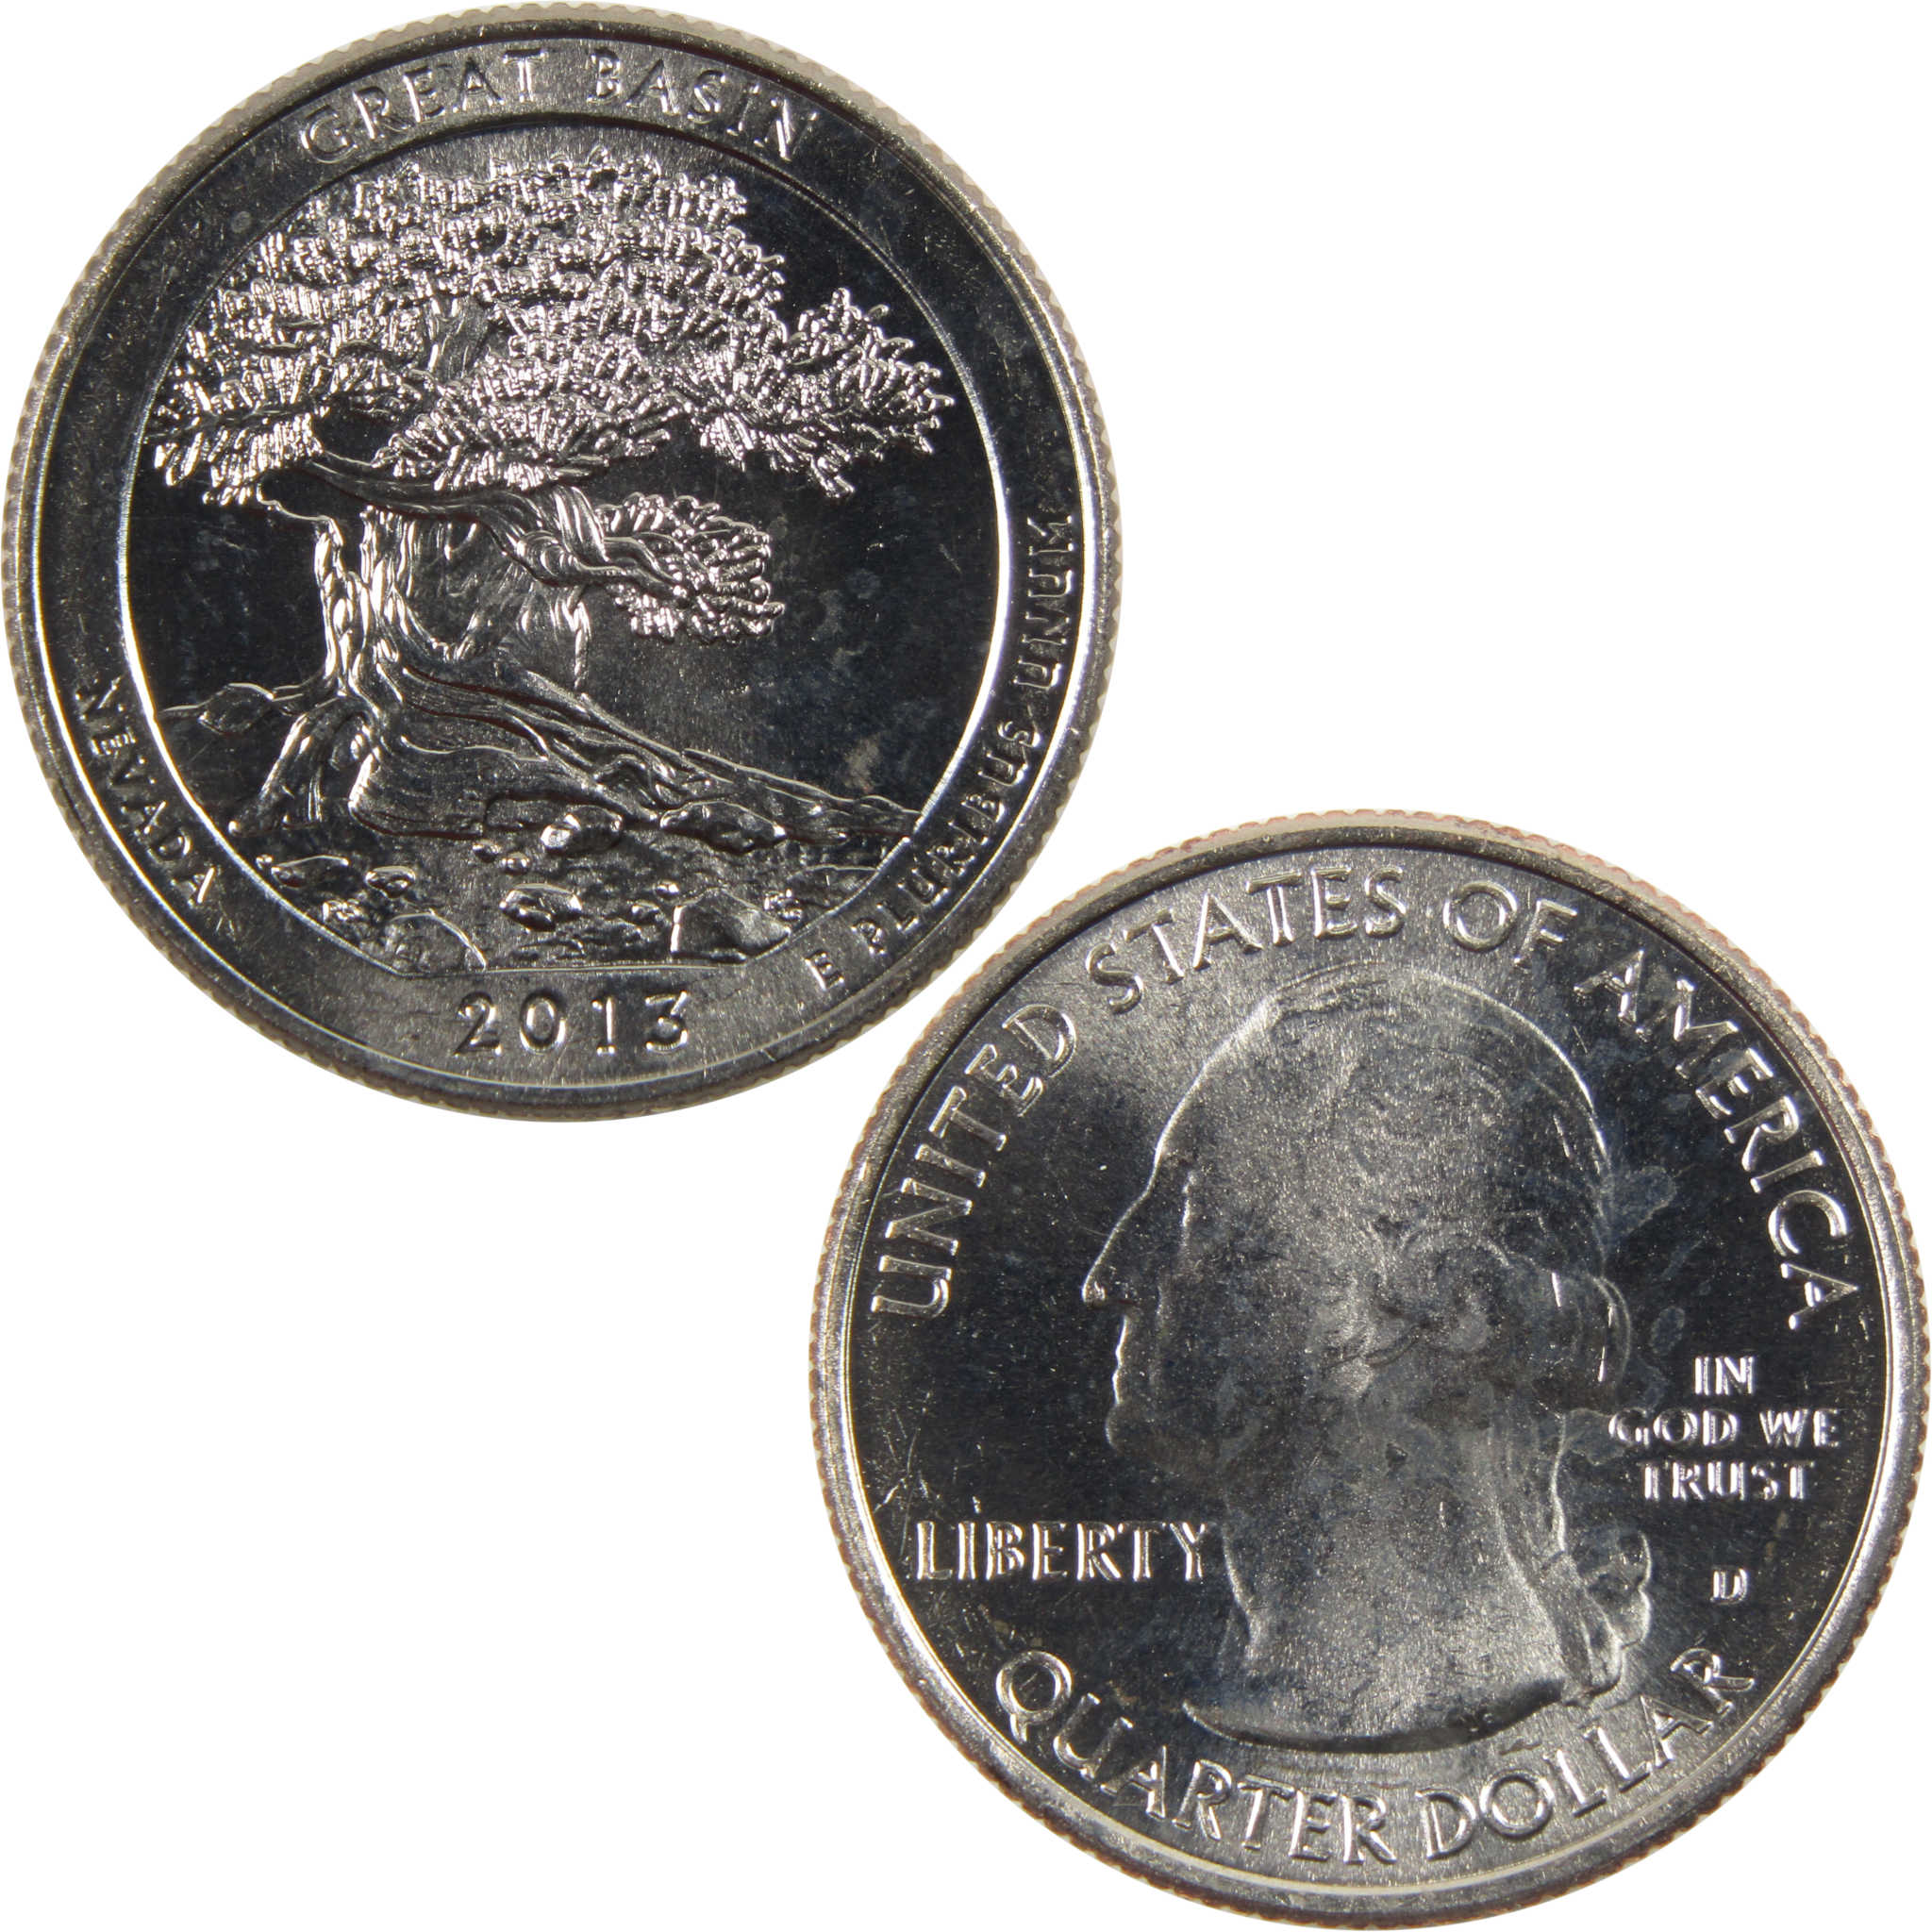 2013 D Great Basin National Park Quarter BU Uncirculated Clad 25c Coin